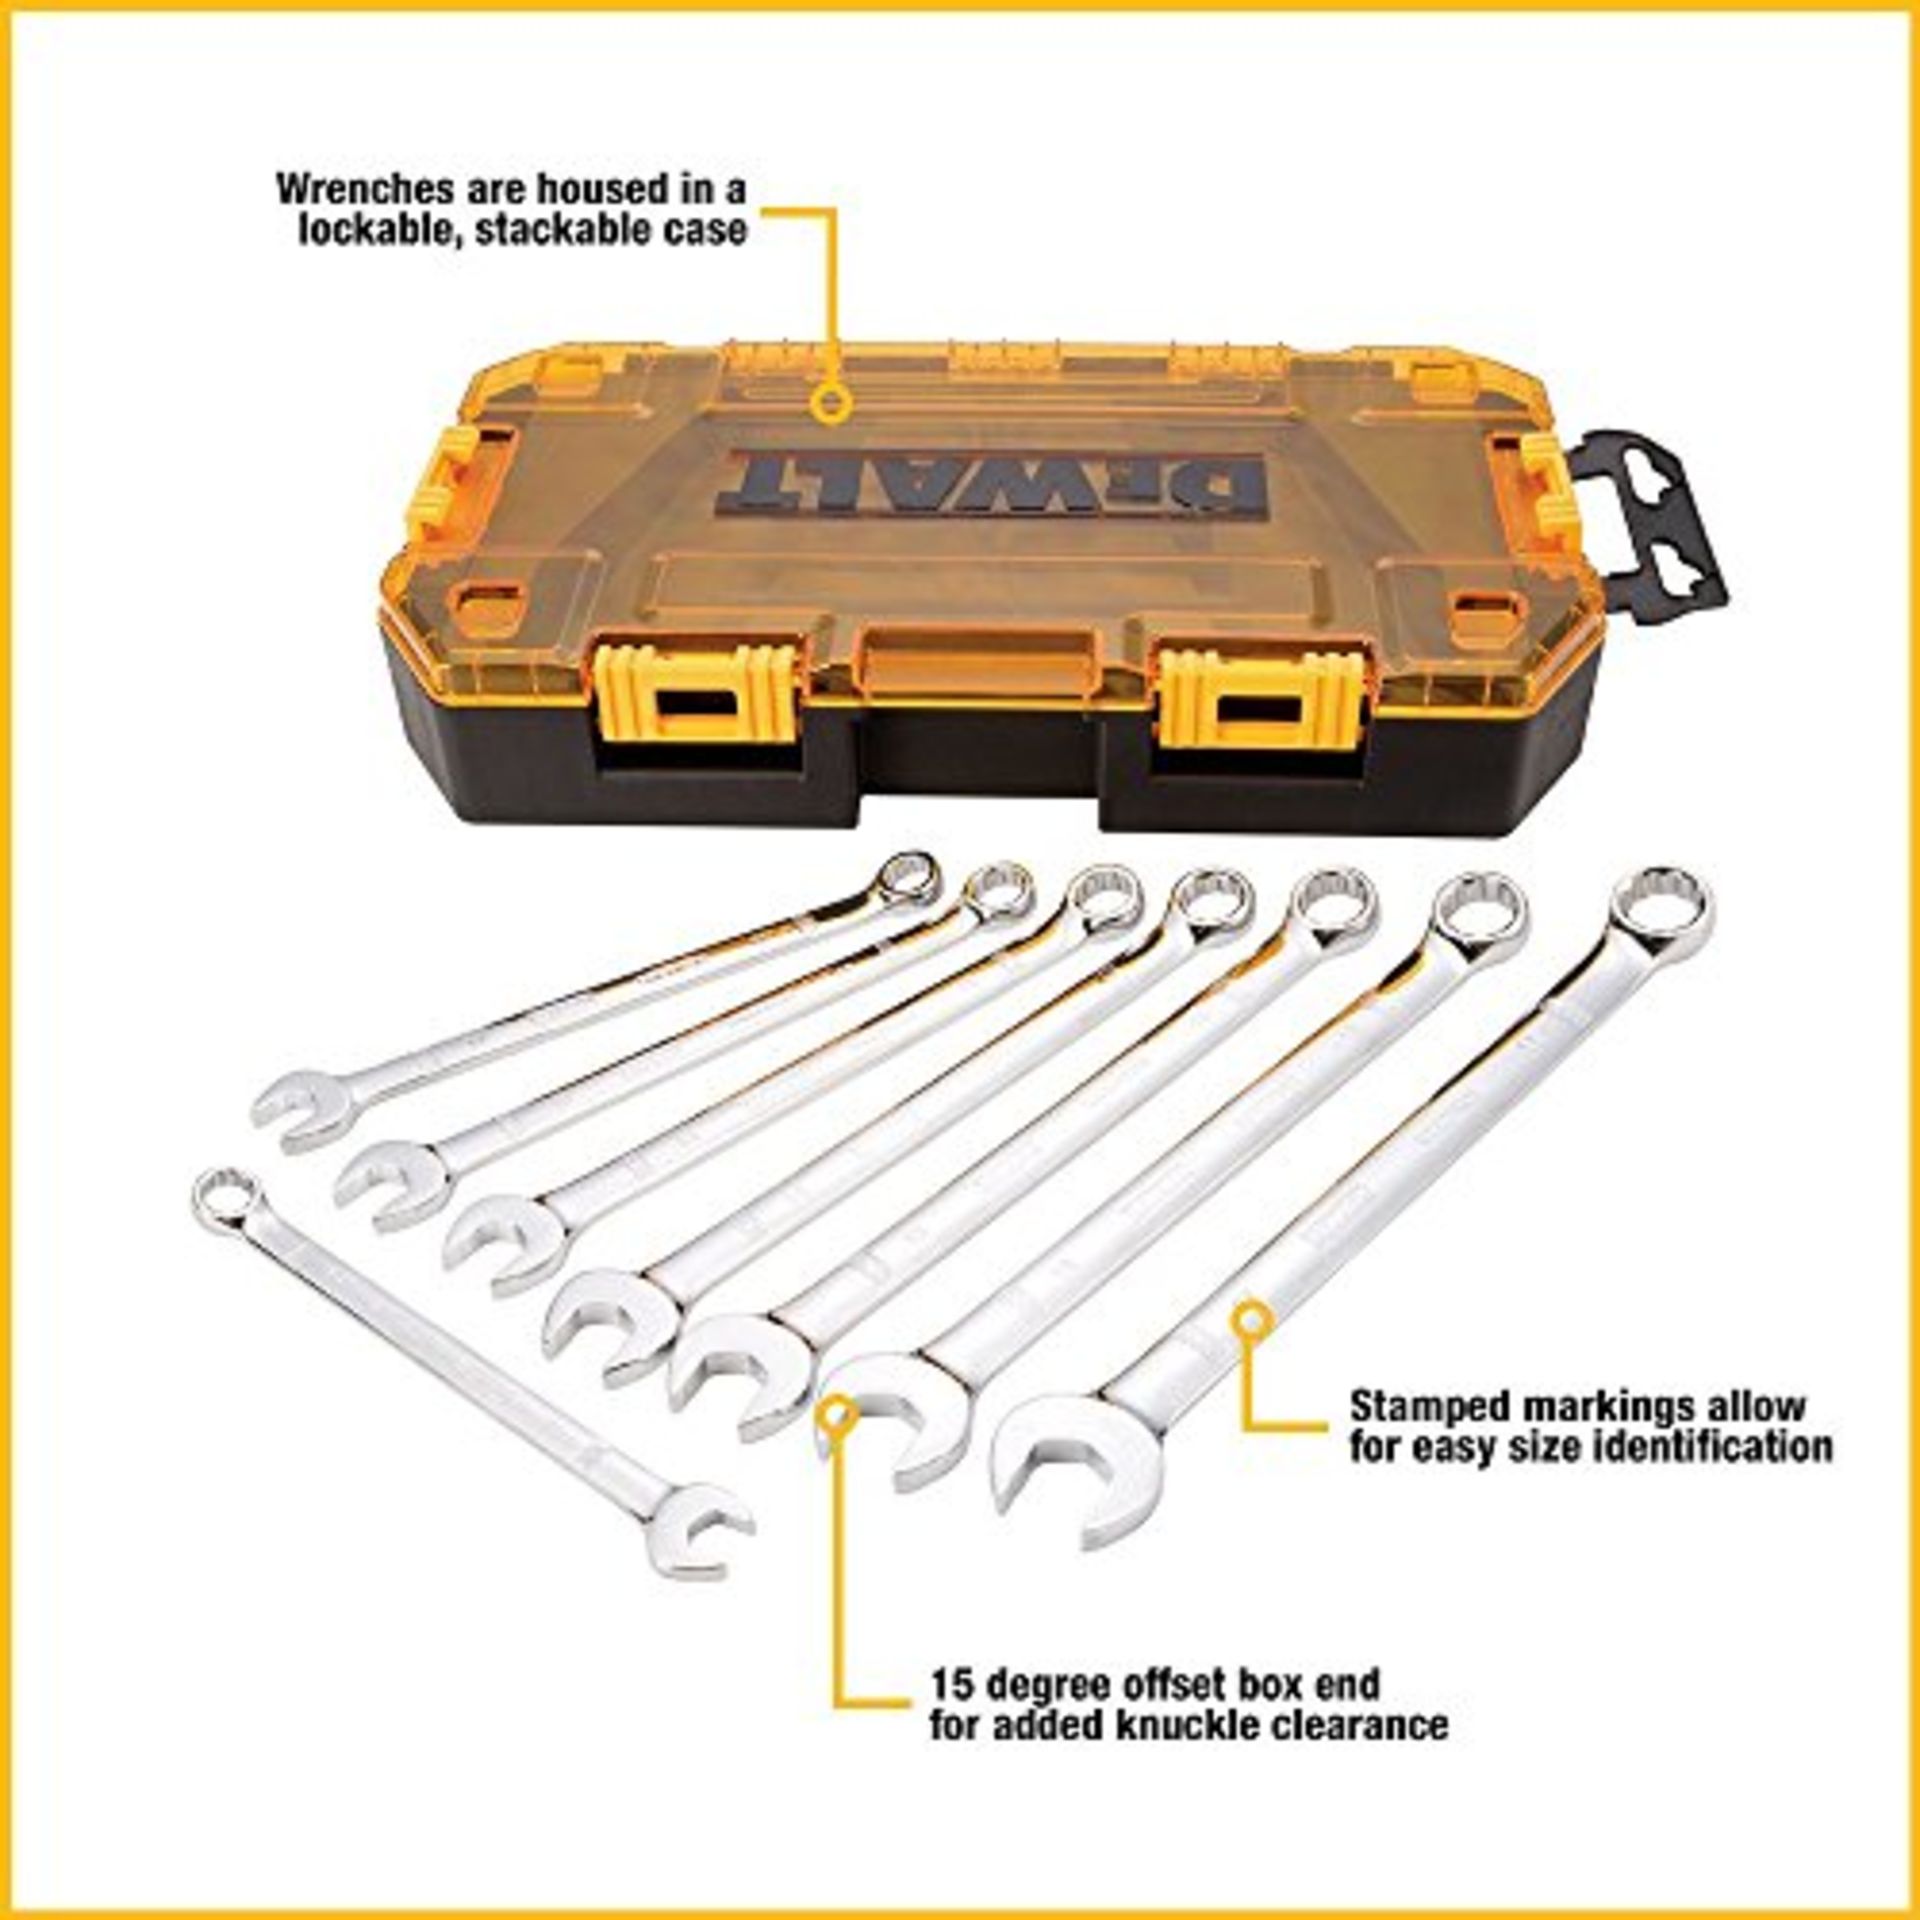 1 x Stanley Tools STADW73810 Tough Combination Spanner Set DWMT73810 | EAN: 0076174738100 | RRP £31. - Image 2 of 3